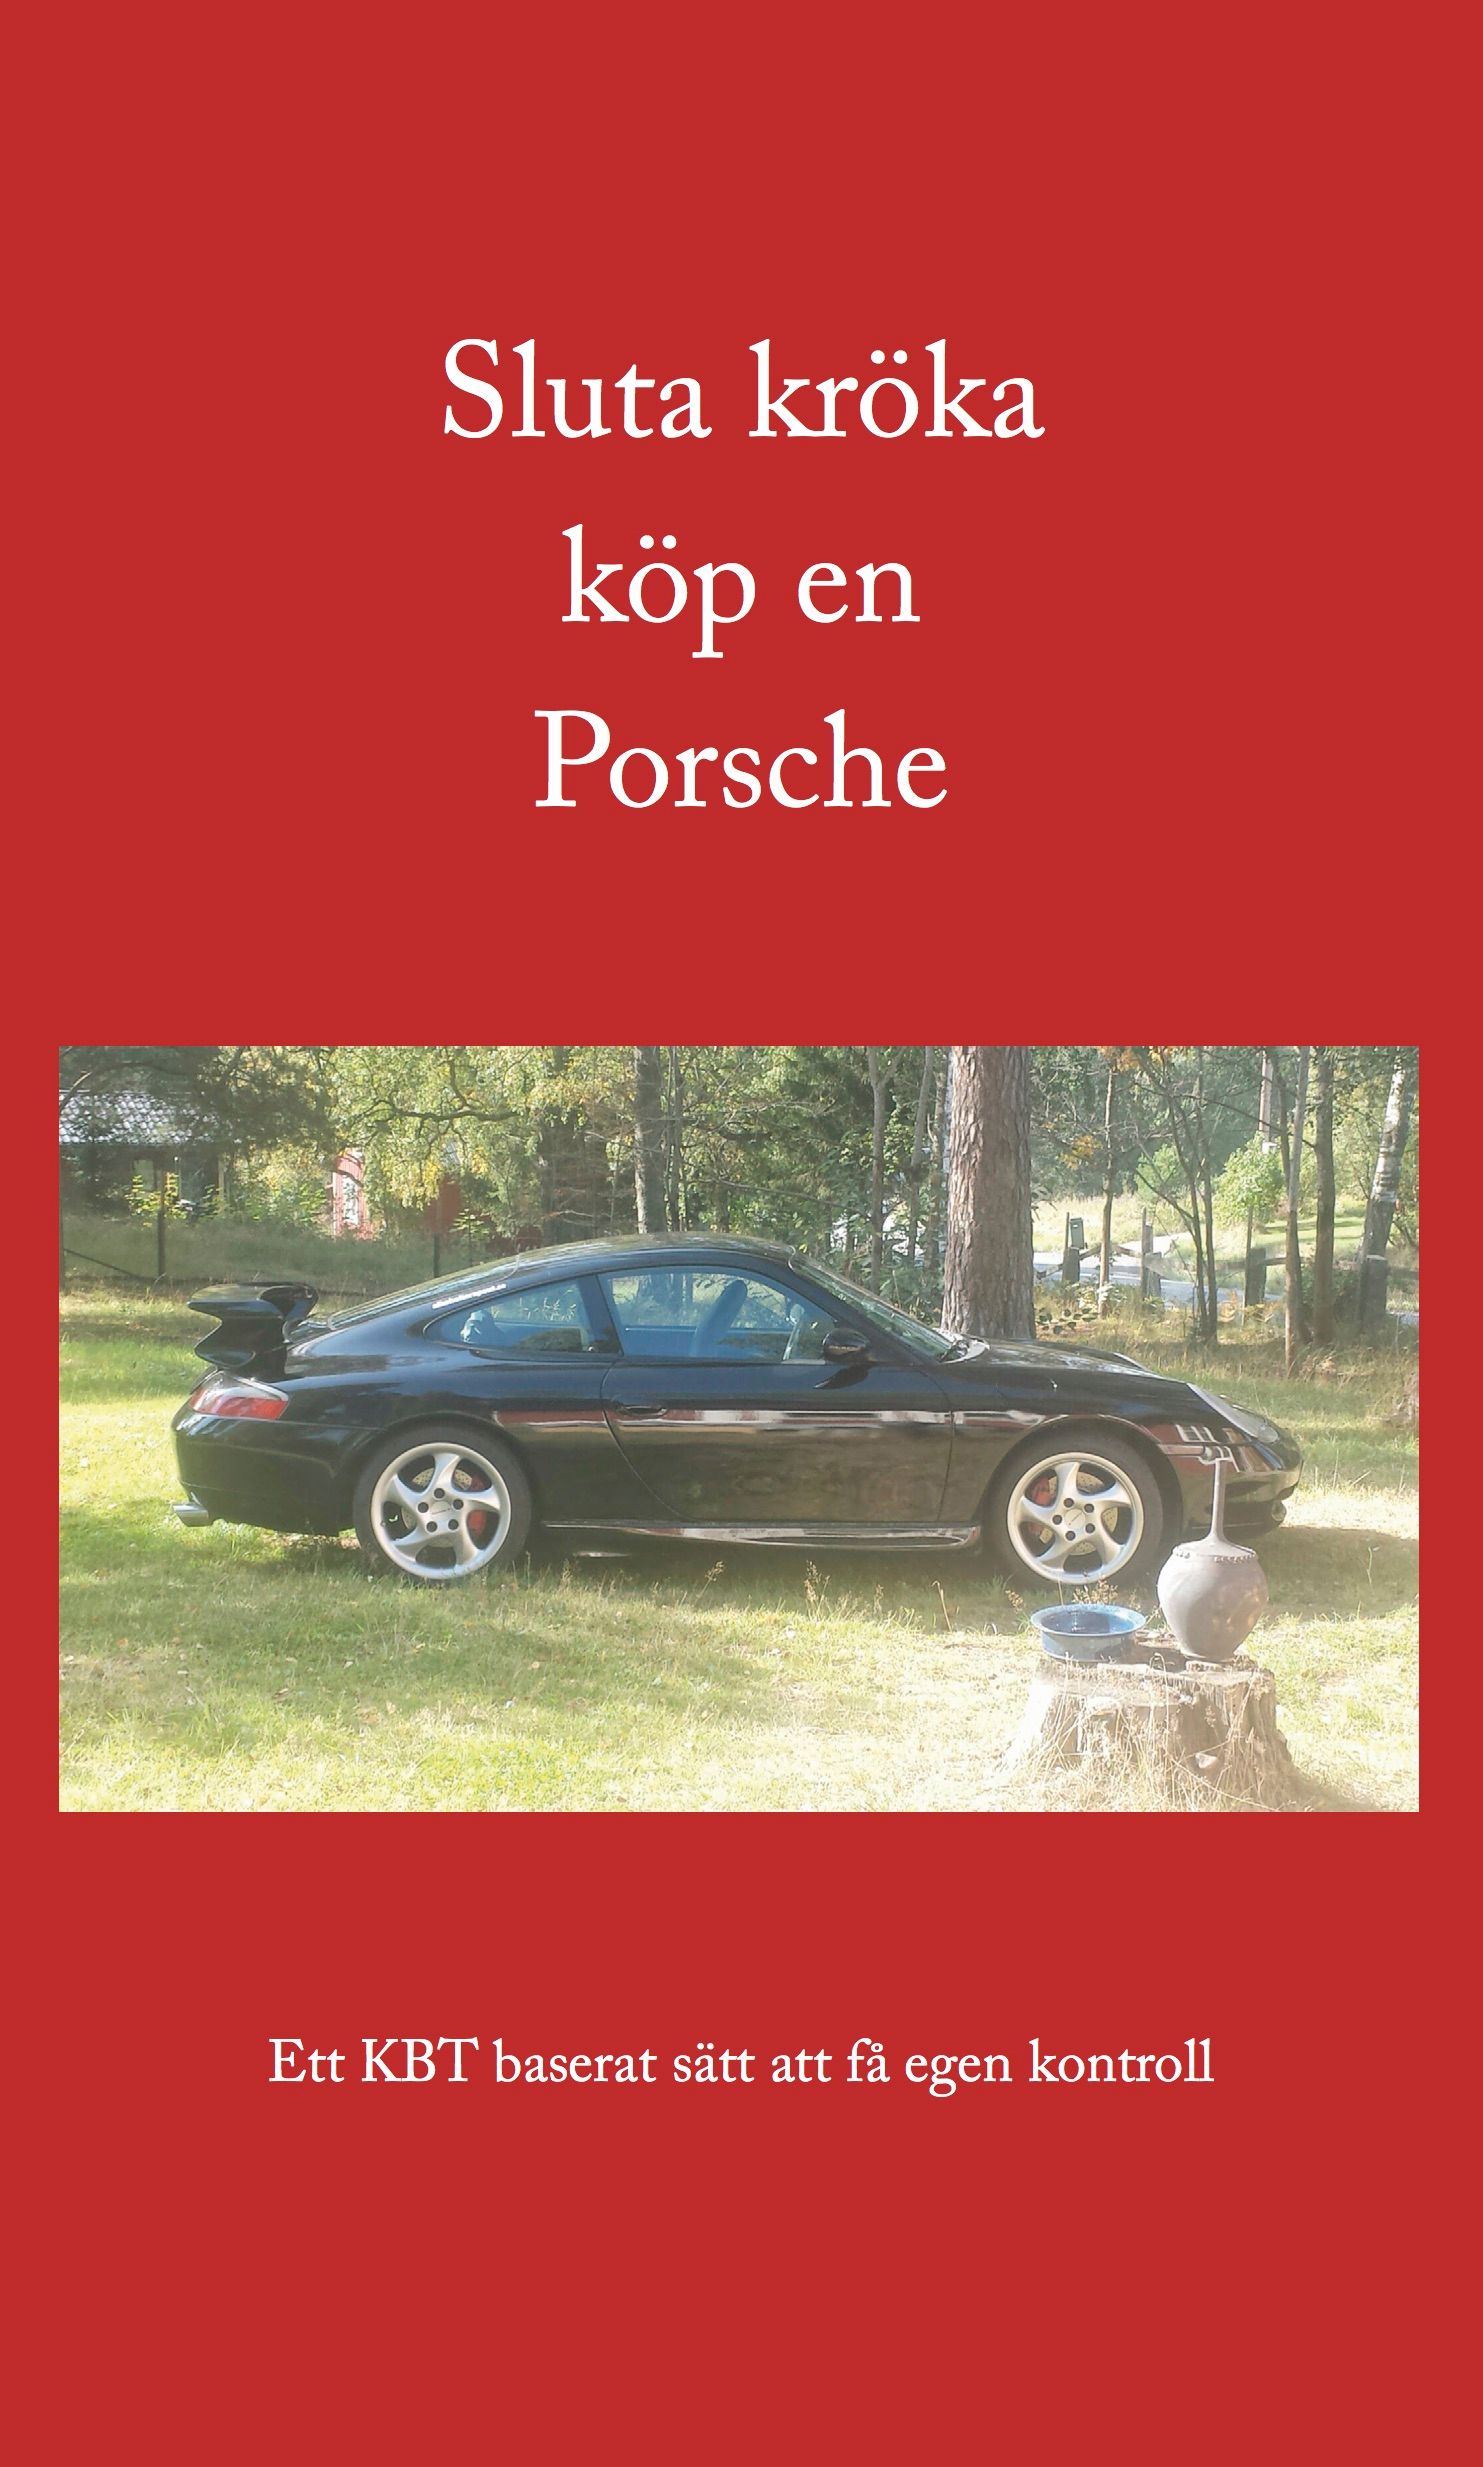 Sluta kröka köp en Porsche, eBook by Isak Isaksson